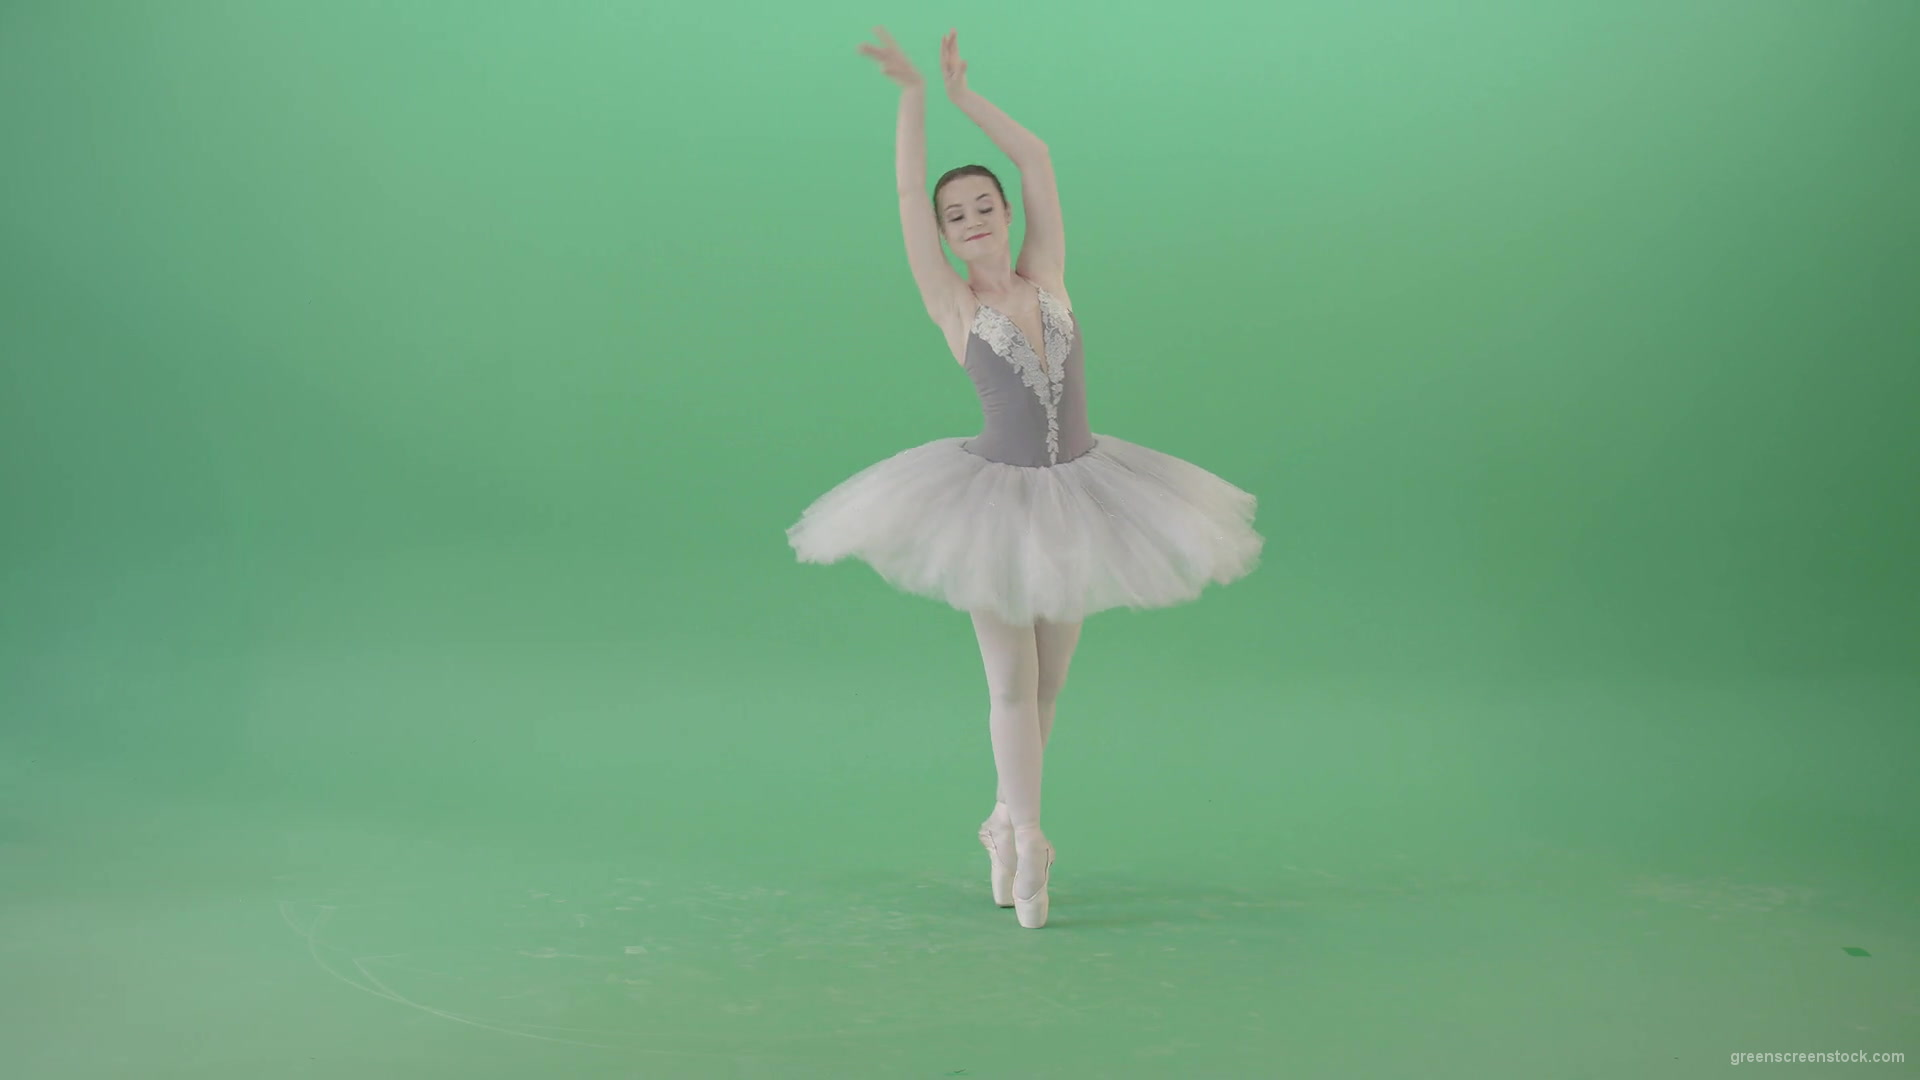 Ballerina-waving-hands-and-dance-on-green-screen-4K-Video-Footage-1920_006 Green Screen Stock